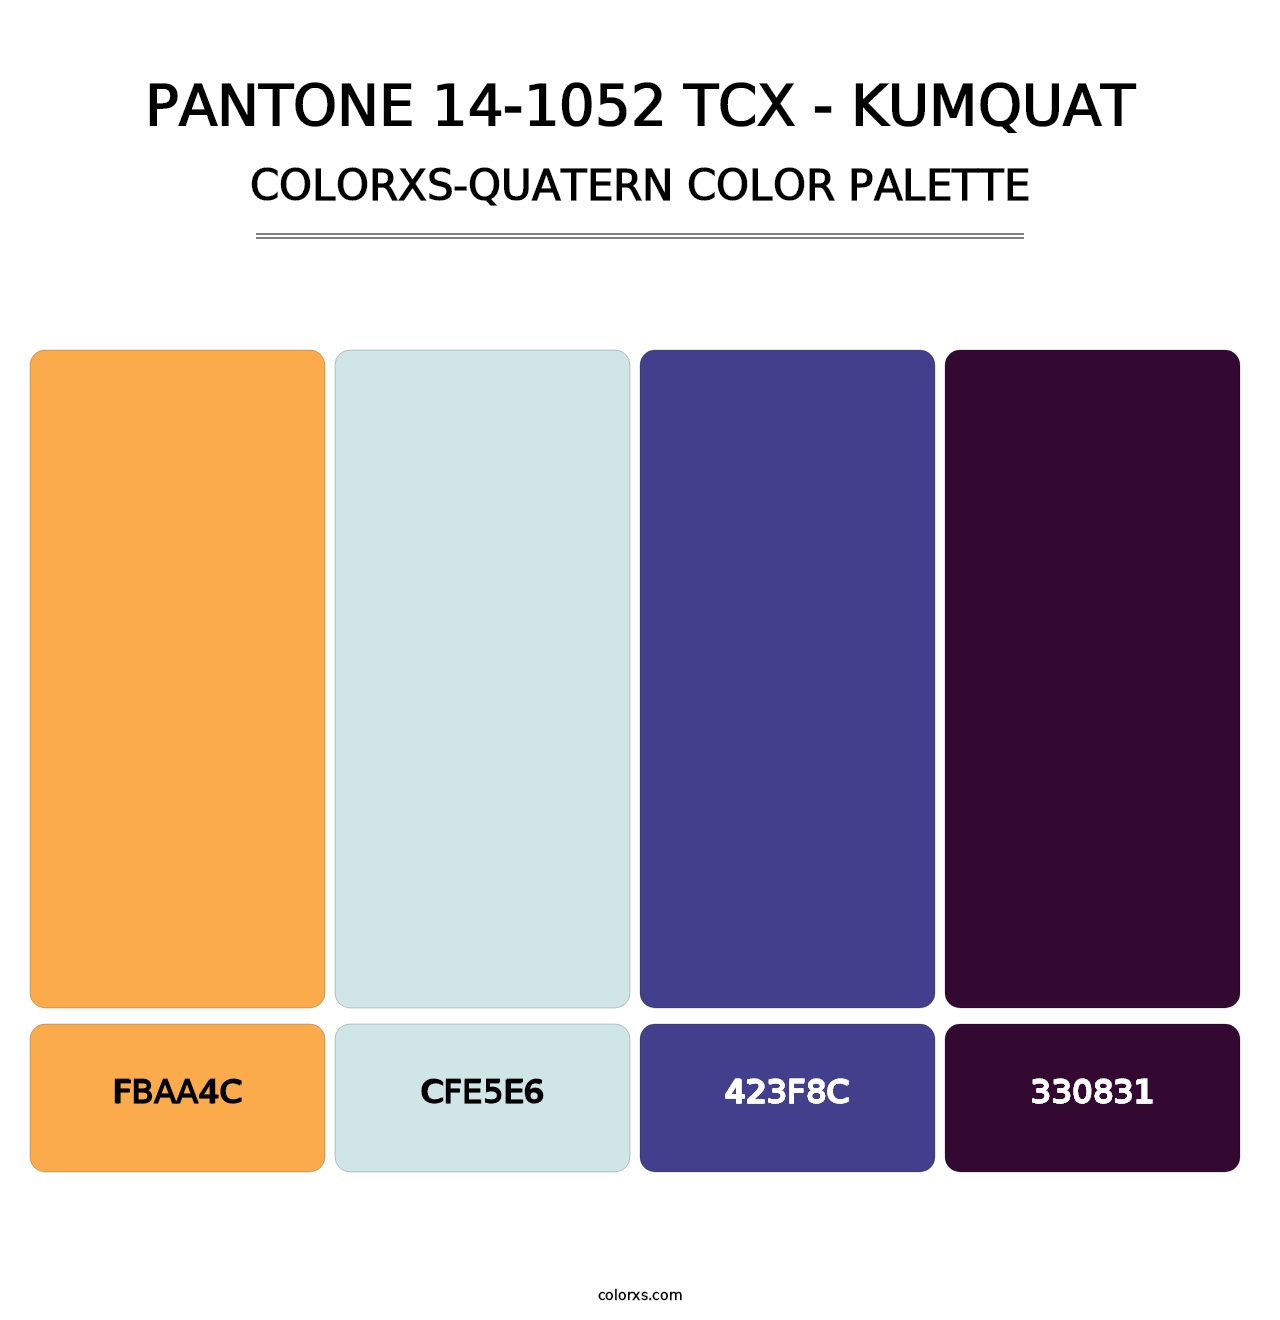 PANTONE 14-1052 TCX - Kumquat - Colorxs Quatern Palette